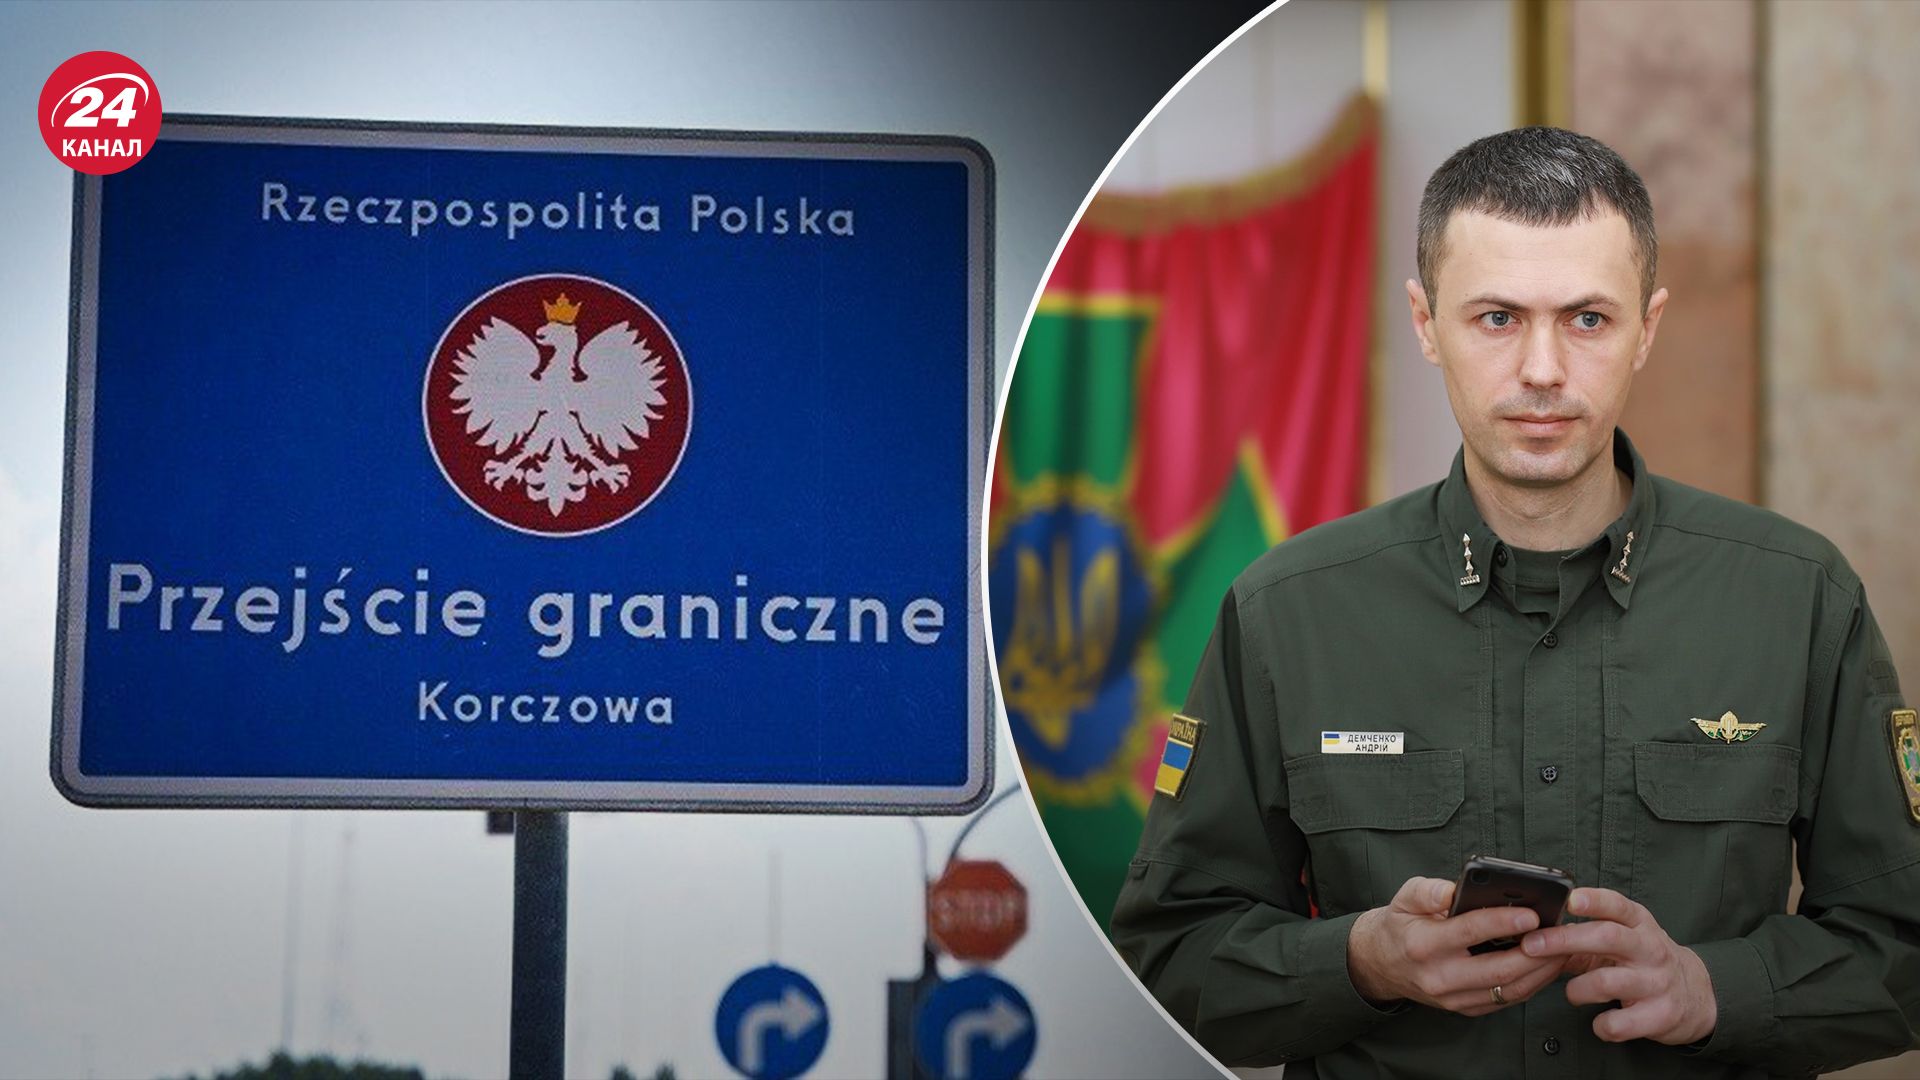 Какова ситуация на границе с Польшей